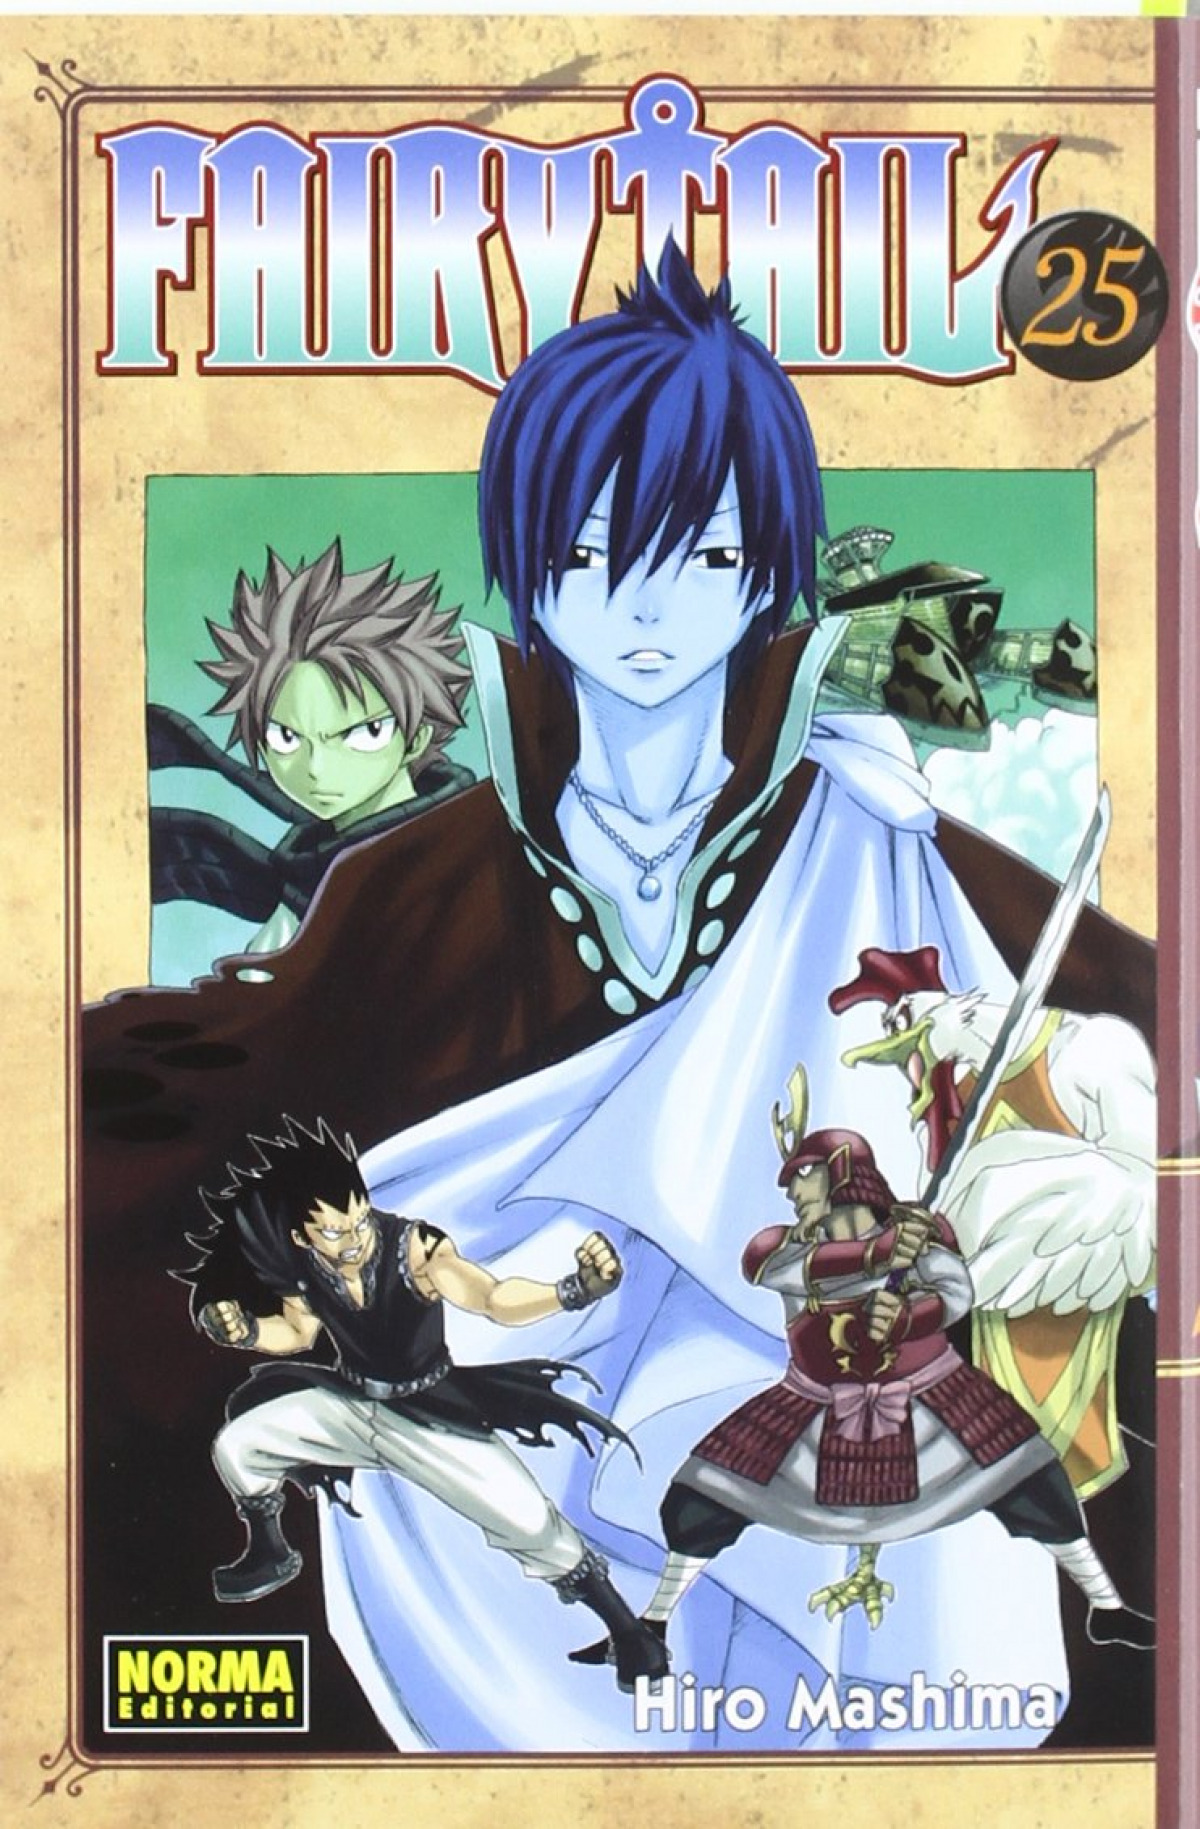 Fairy tail 25 - Mashima, Hiro